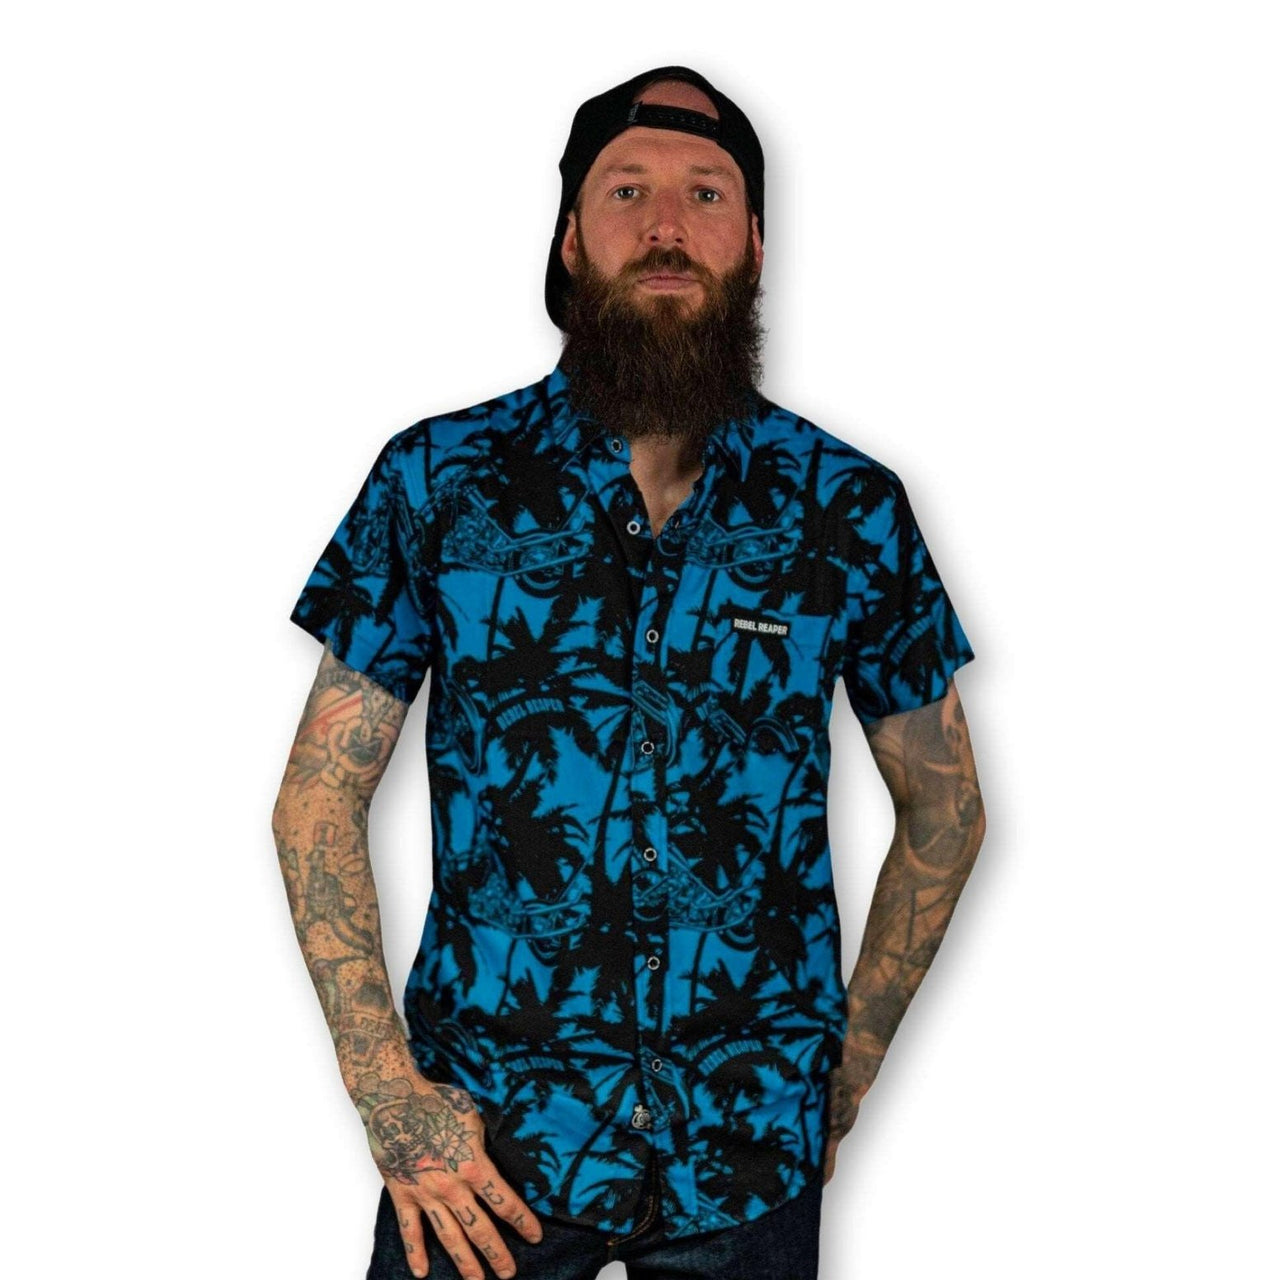 Blue Chopper Vice Shirt - Rebel Reaper Clothing Company Button Up Shirt Men's